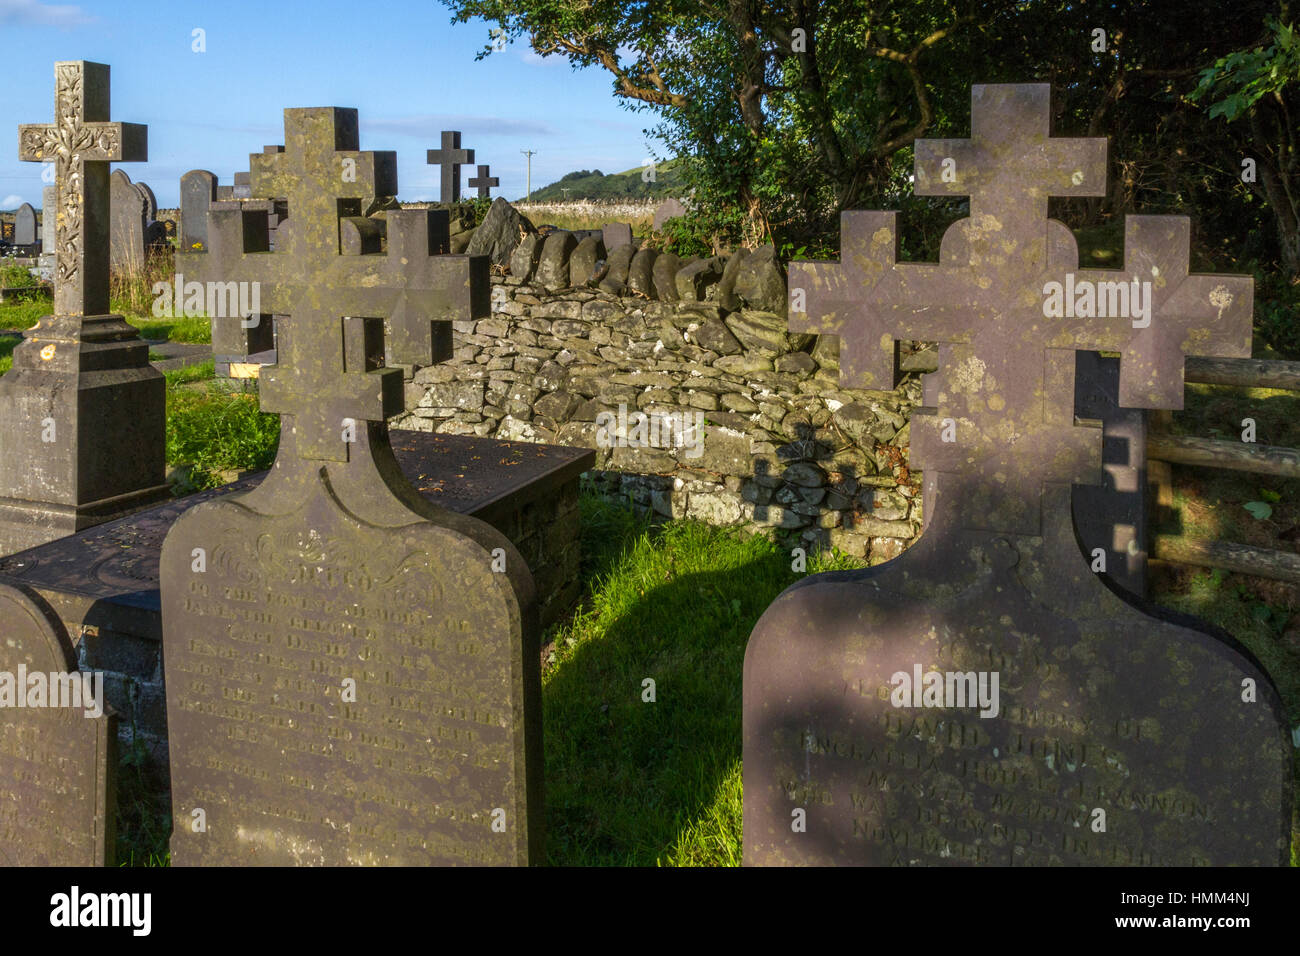 Welsh Church graveyard scene with many stone crosses. Stock Photo